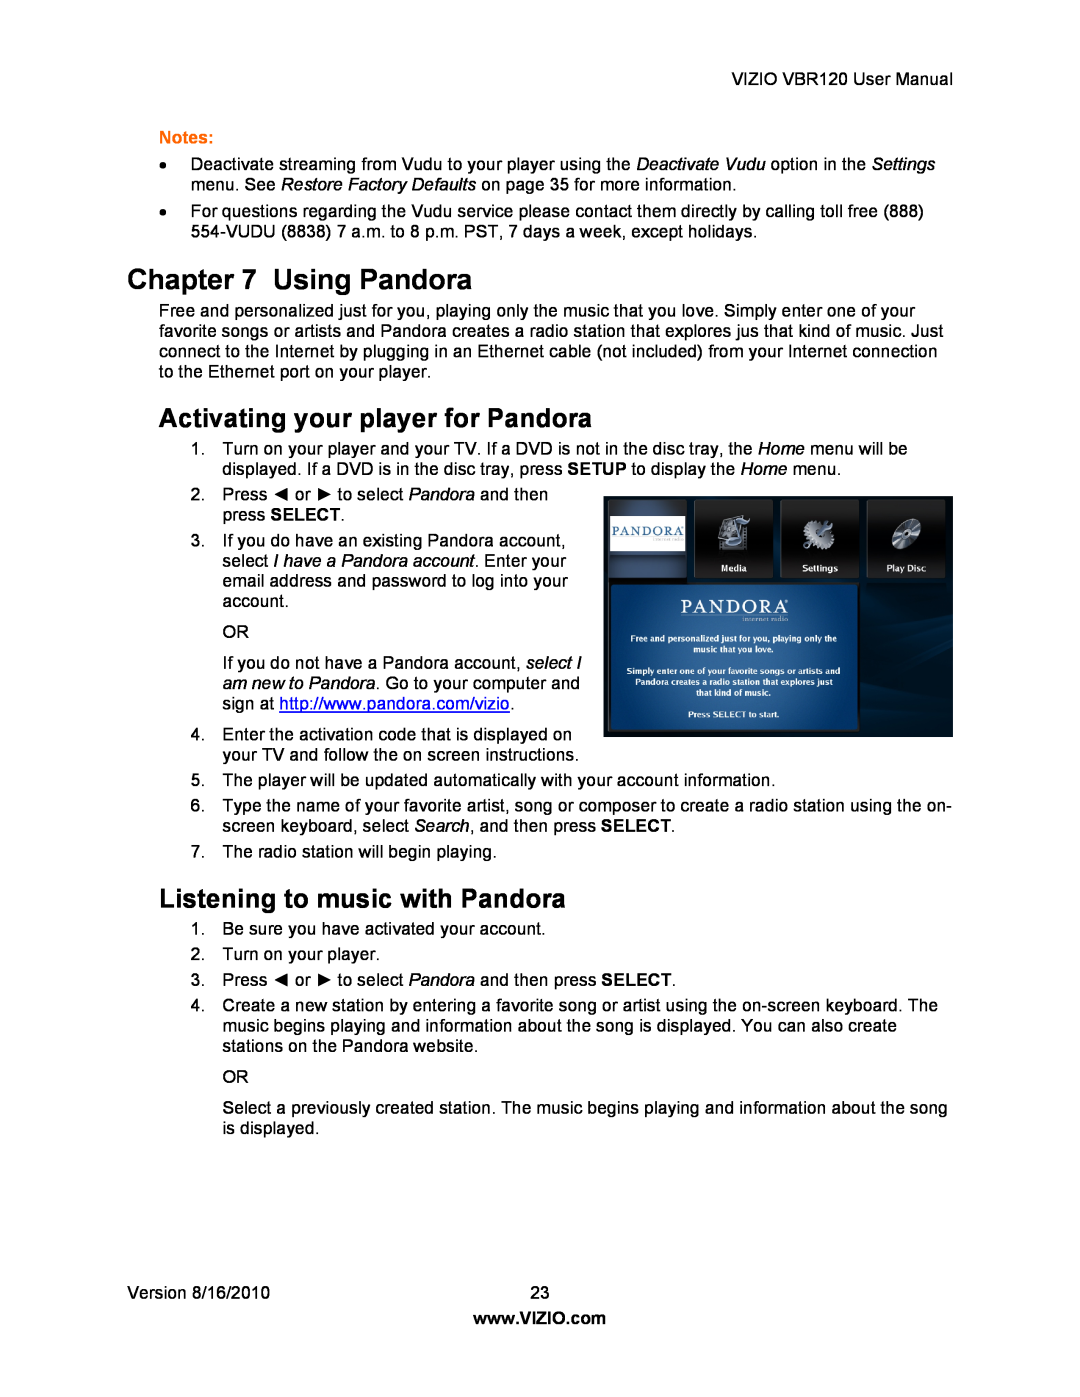 Vizio VBR 120 user manual Using Pandora, Activating your player for Pandora, Listening to music with Pandora 